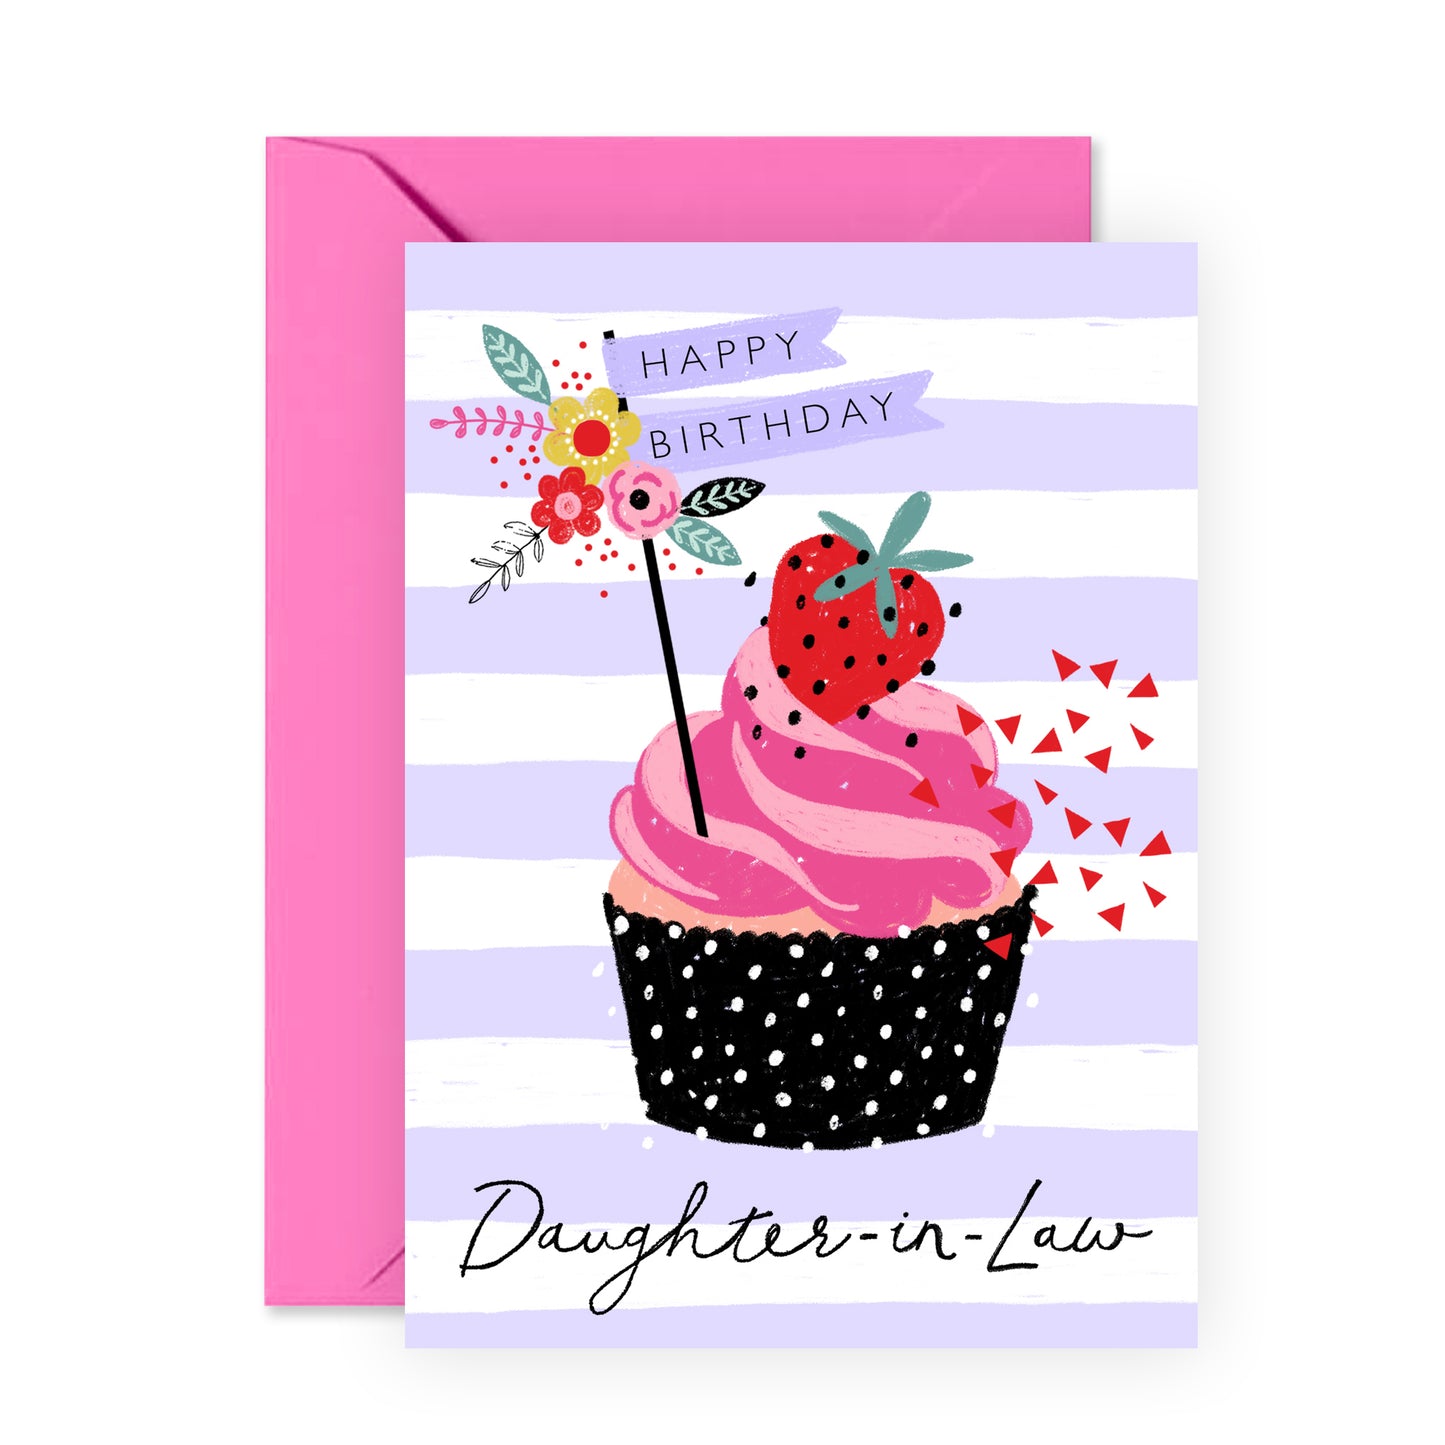 Daughter Birthday Card - Happy Birthday Daughter-In-Law - For Women Her Girls